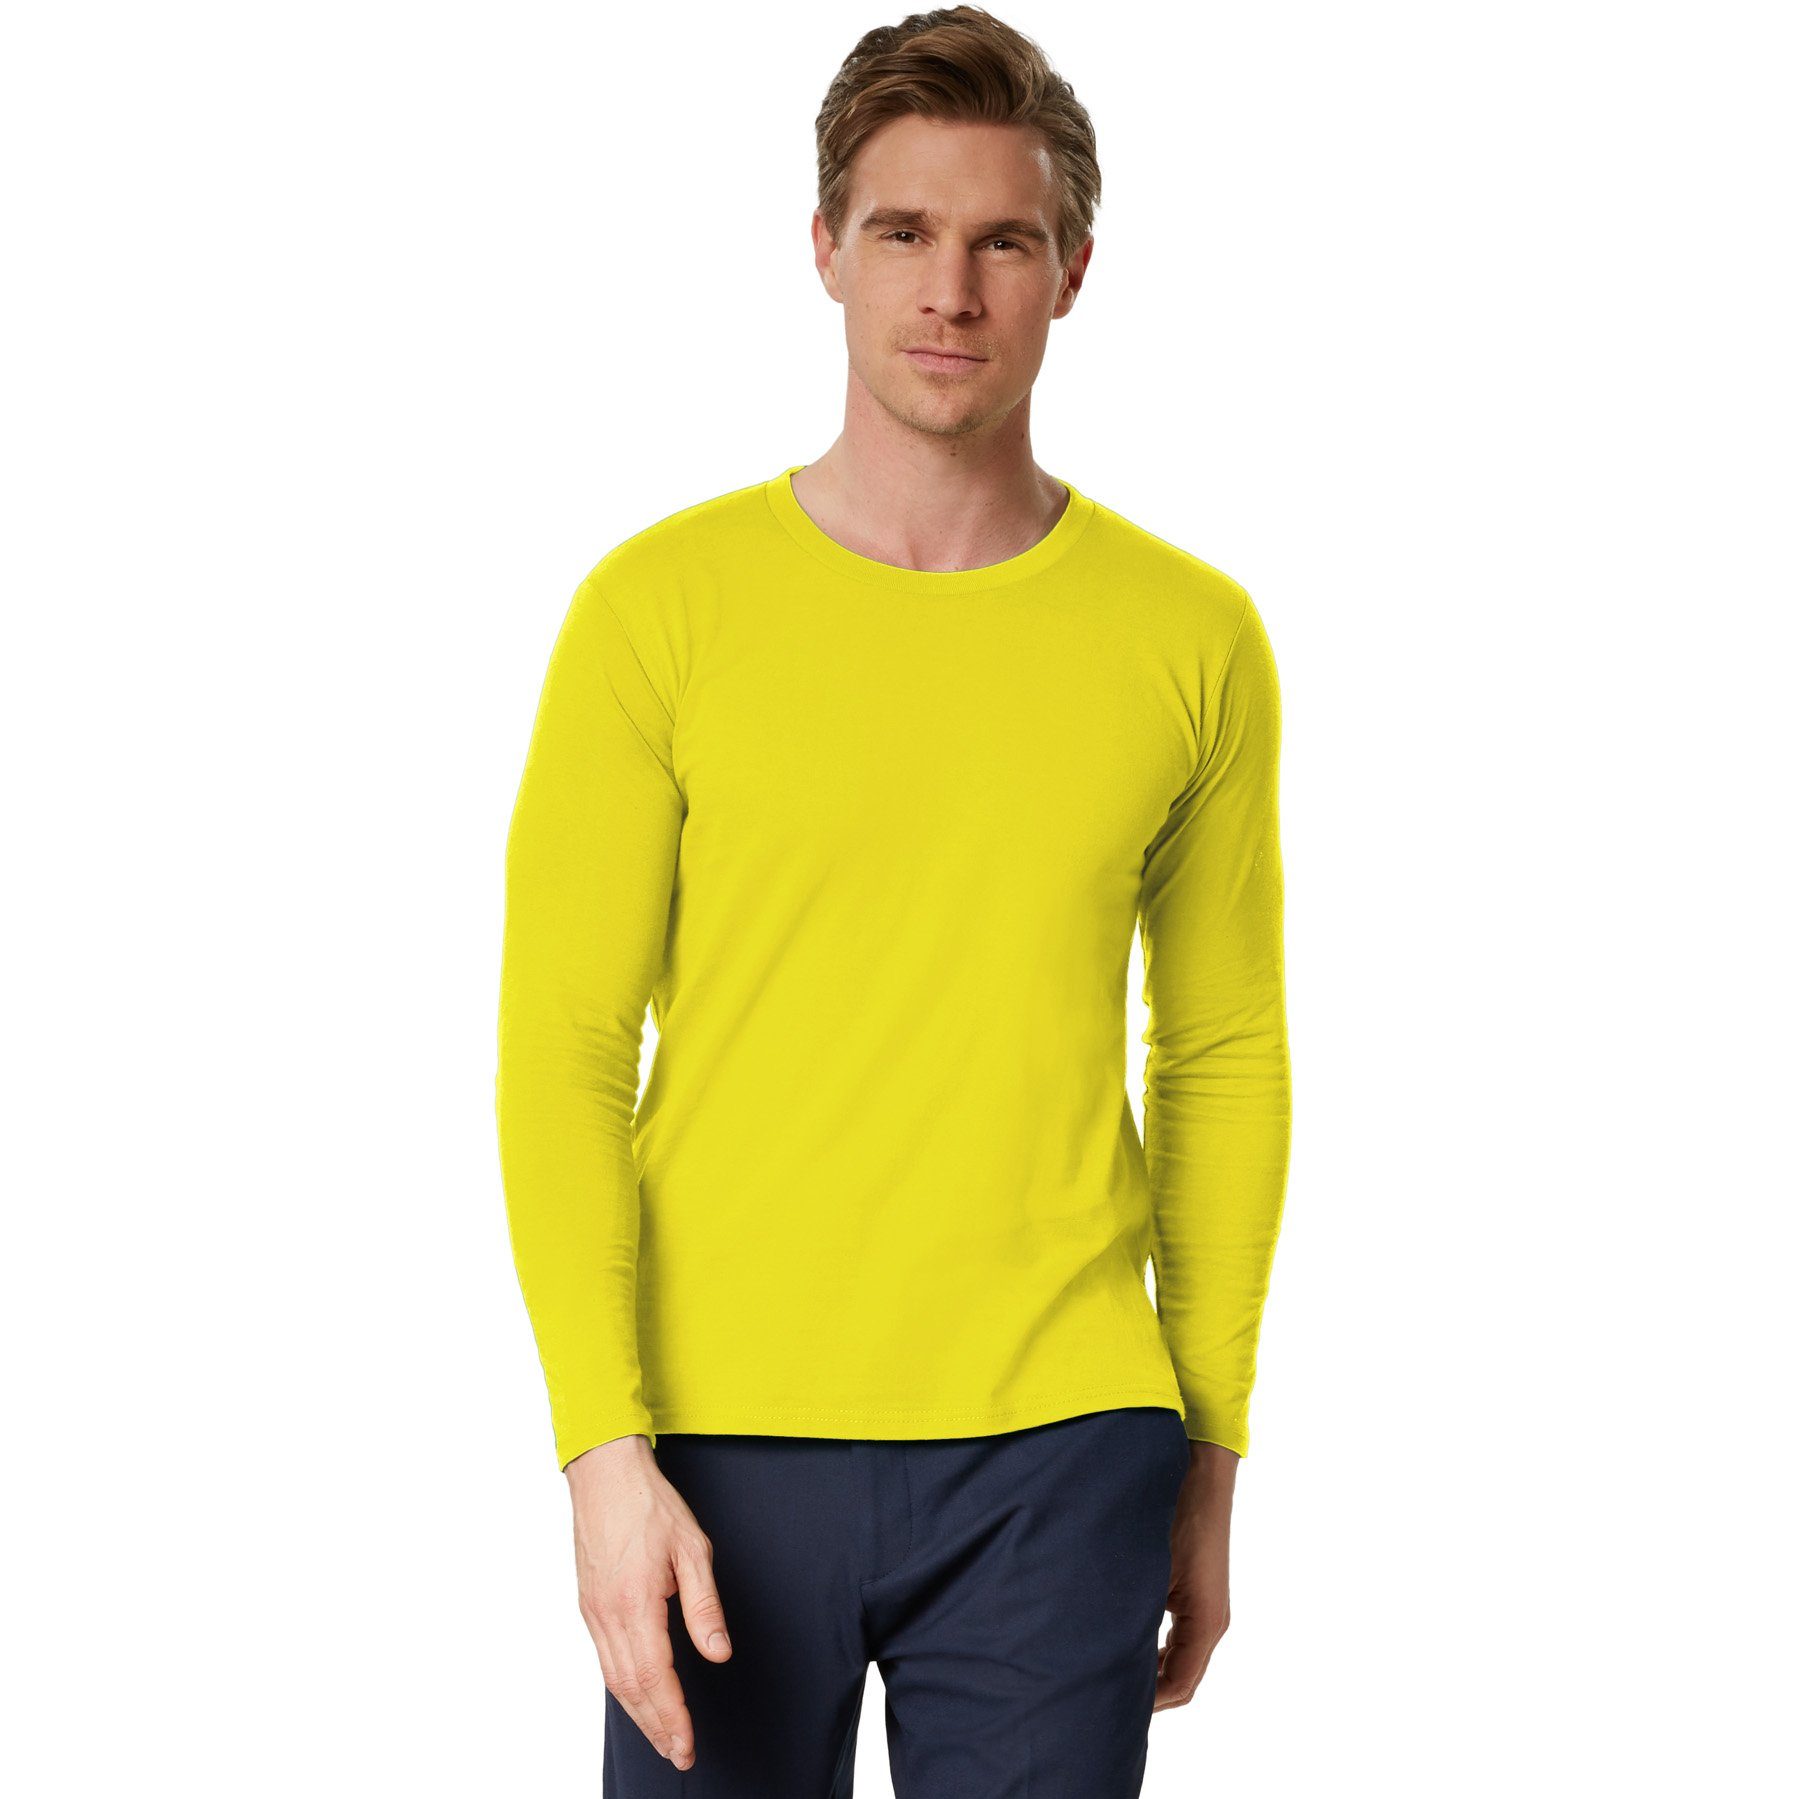 Longsleeve Männer dressforfun Langarm-Shirt Rundhals gelb